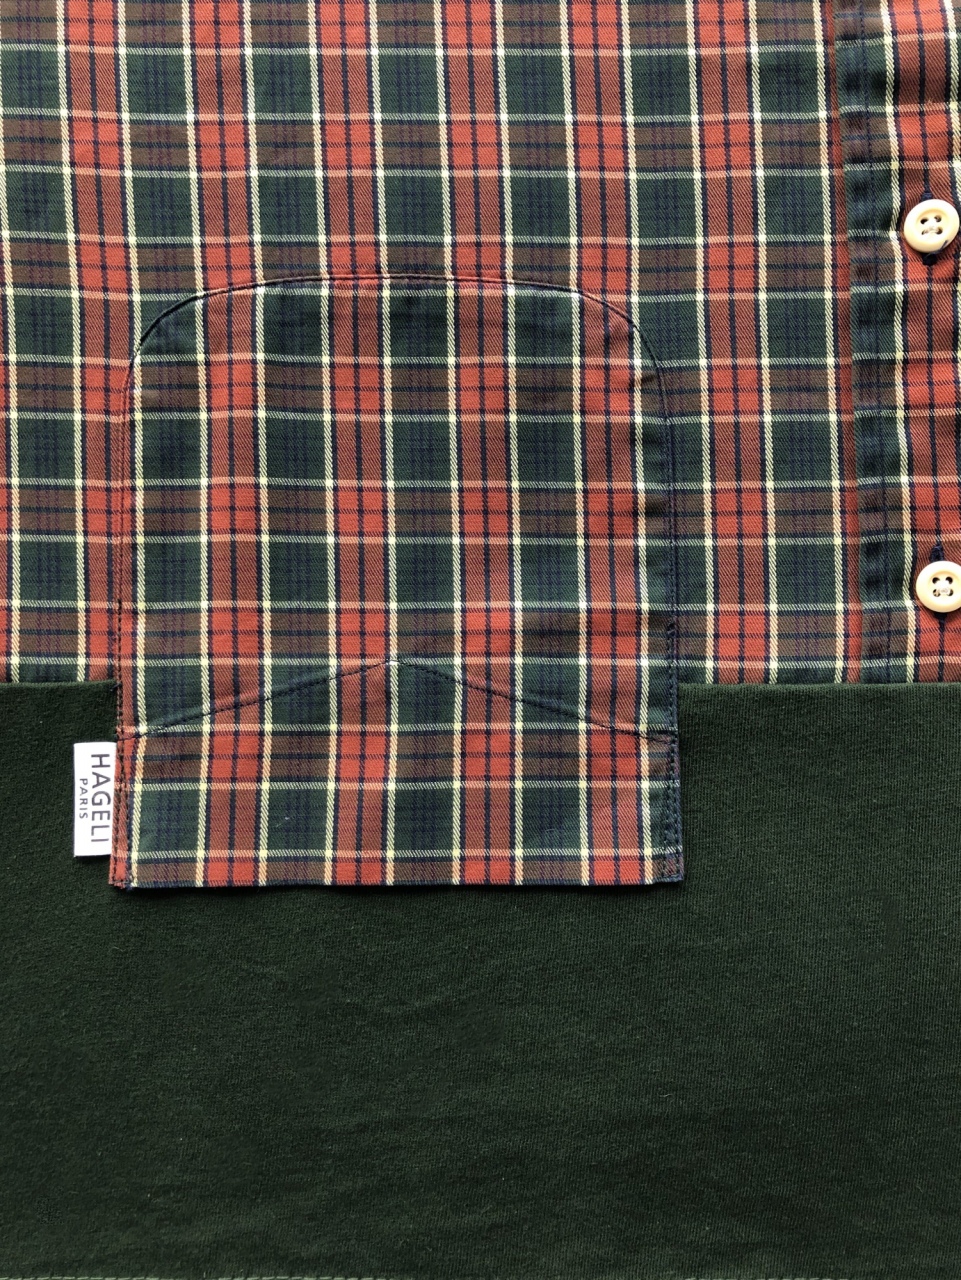 Detail T-shirt, cotton from vintage shirt and T-shirt, unique piece / 2018